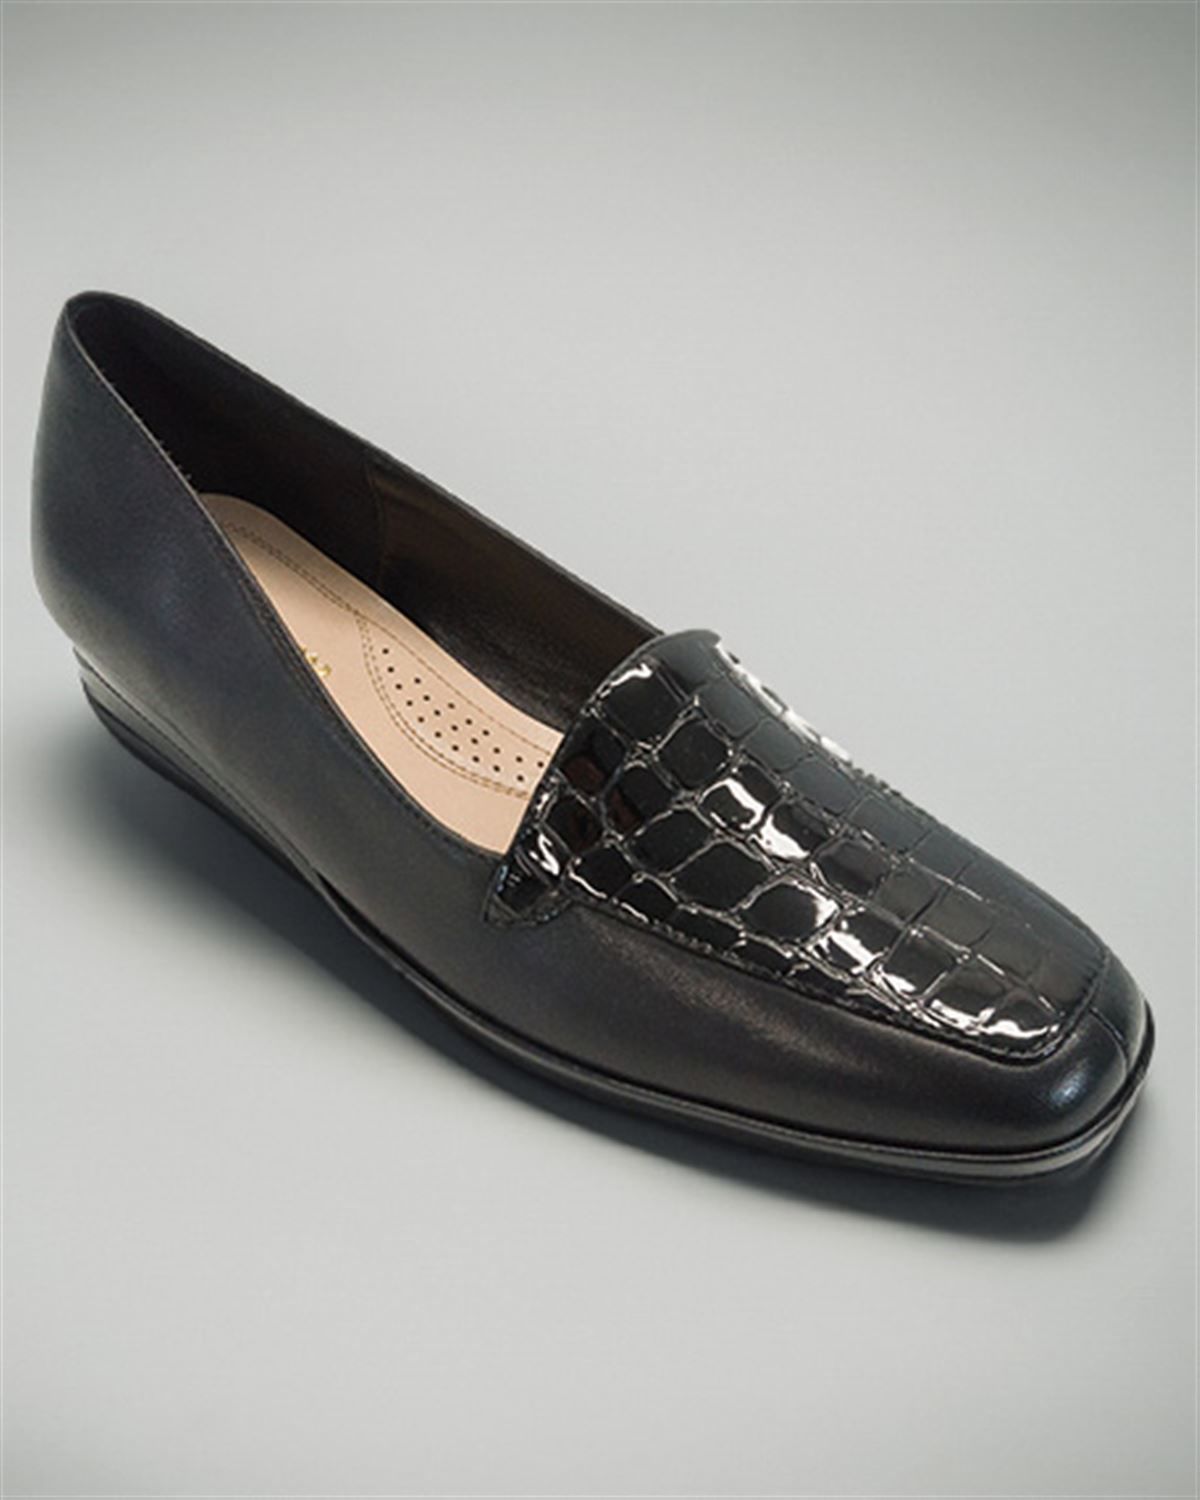 Ladies Van Dal Verona III Shoe. Distinctive leather slip on shoe